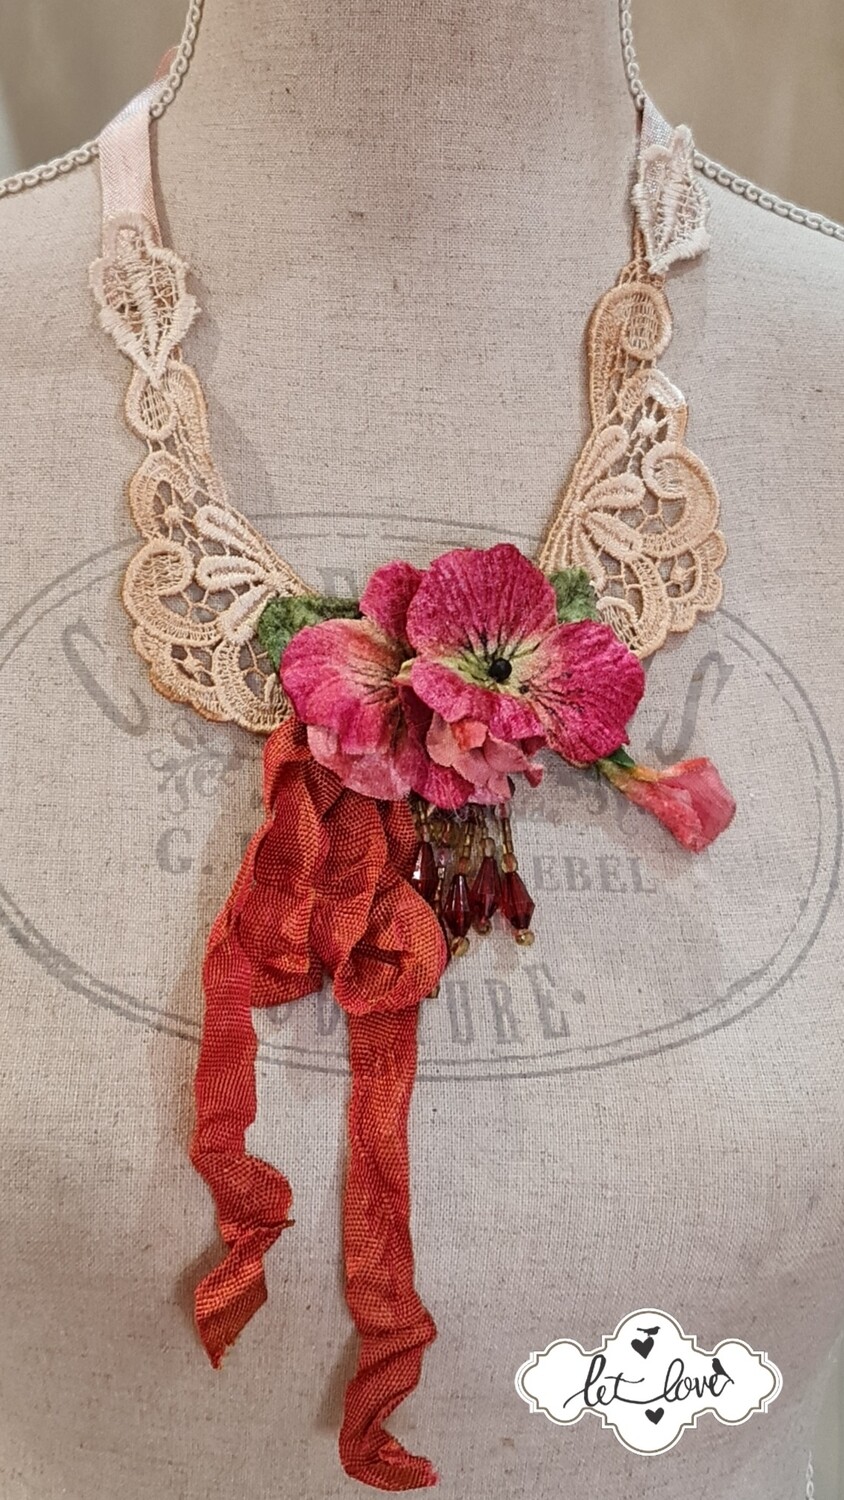 Vintage Lace & Rose Neckpiece